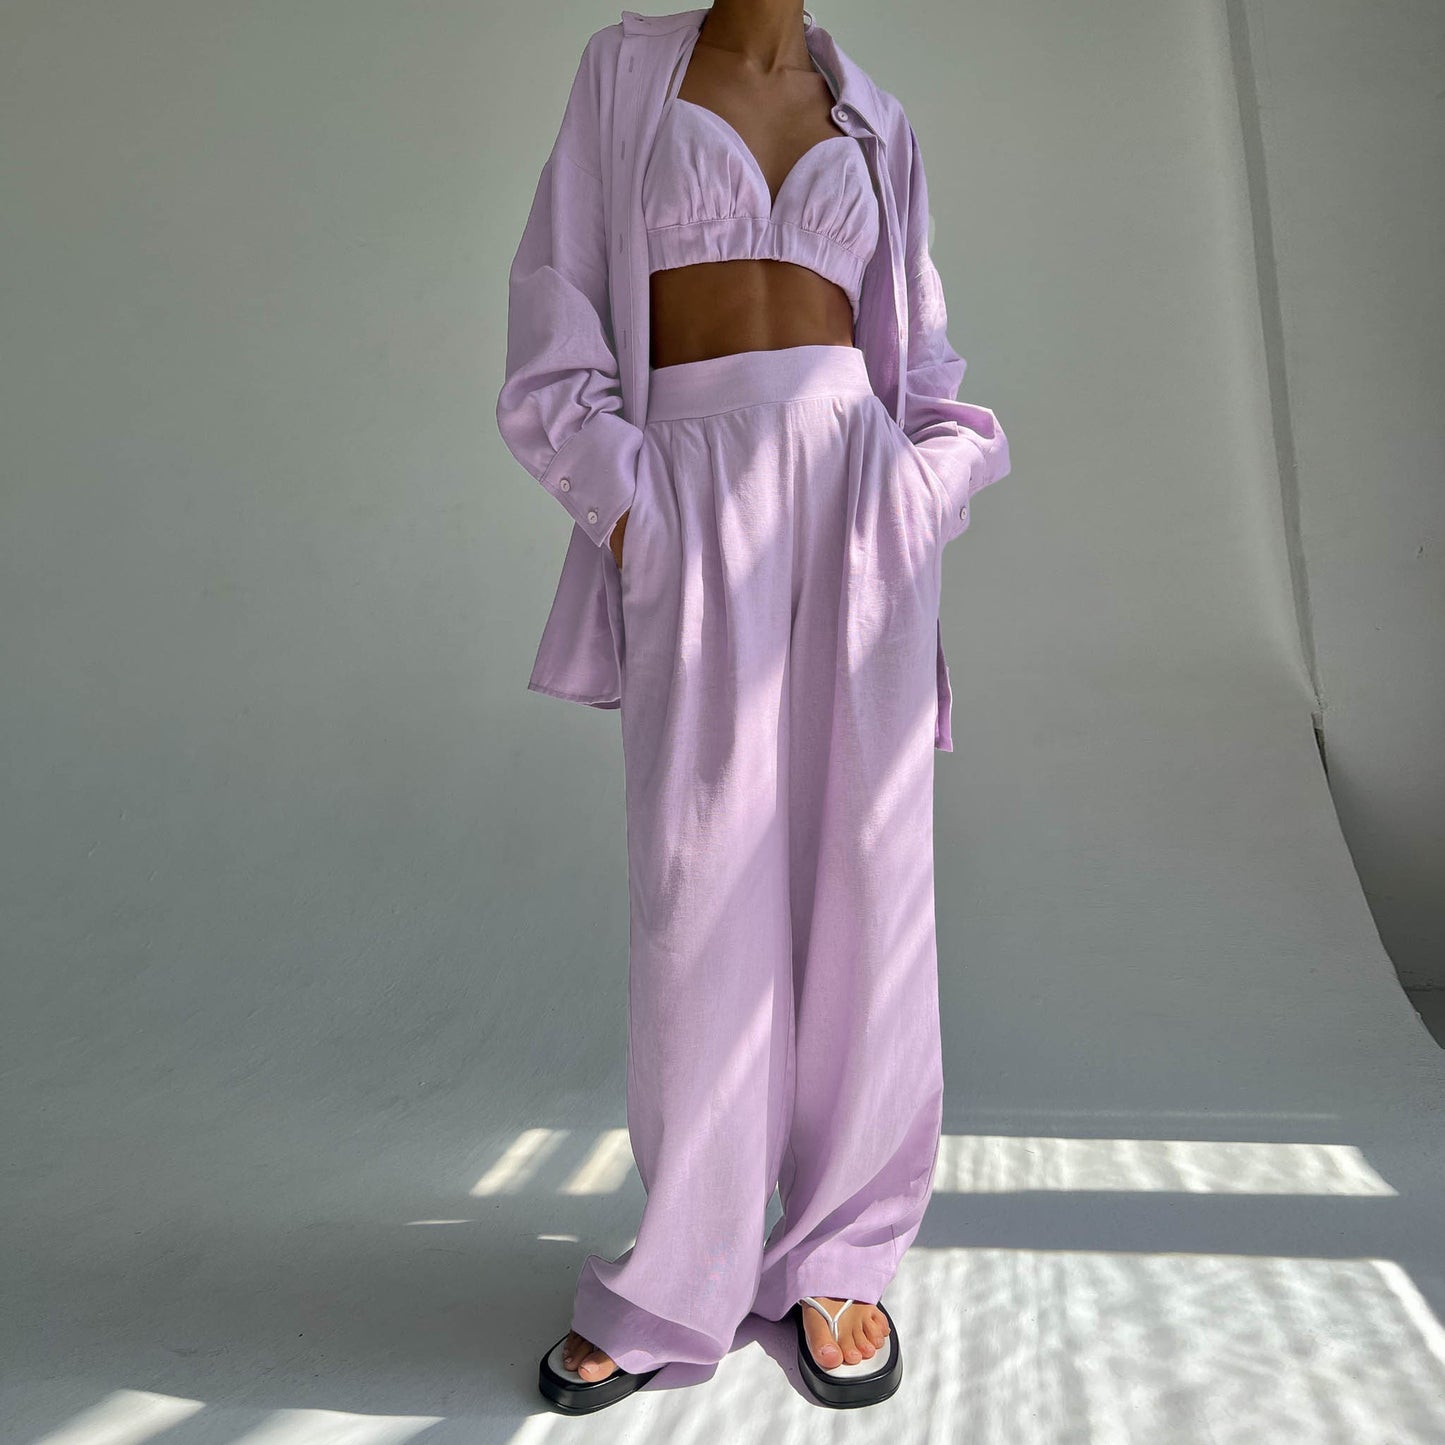 Capsule Wardrobe | Lilac Lavender Cotton Triangle Bra Top Linen Long Sleeve Shirt Casual High Waist Shorts Wide Leg Pants 4 Piece Set Add Each Item Separately